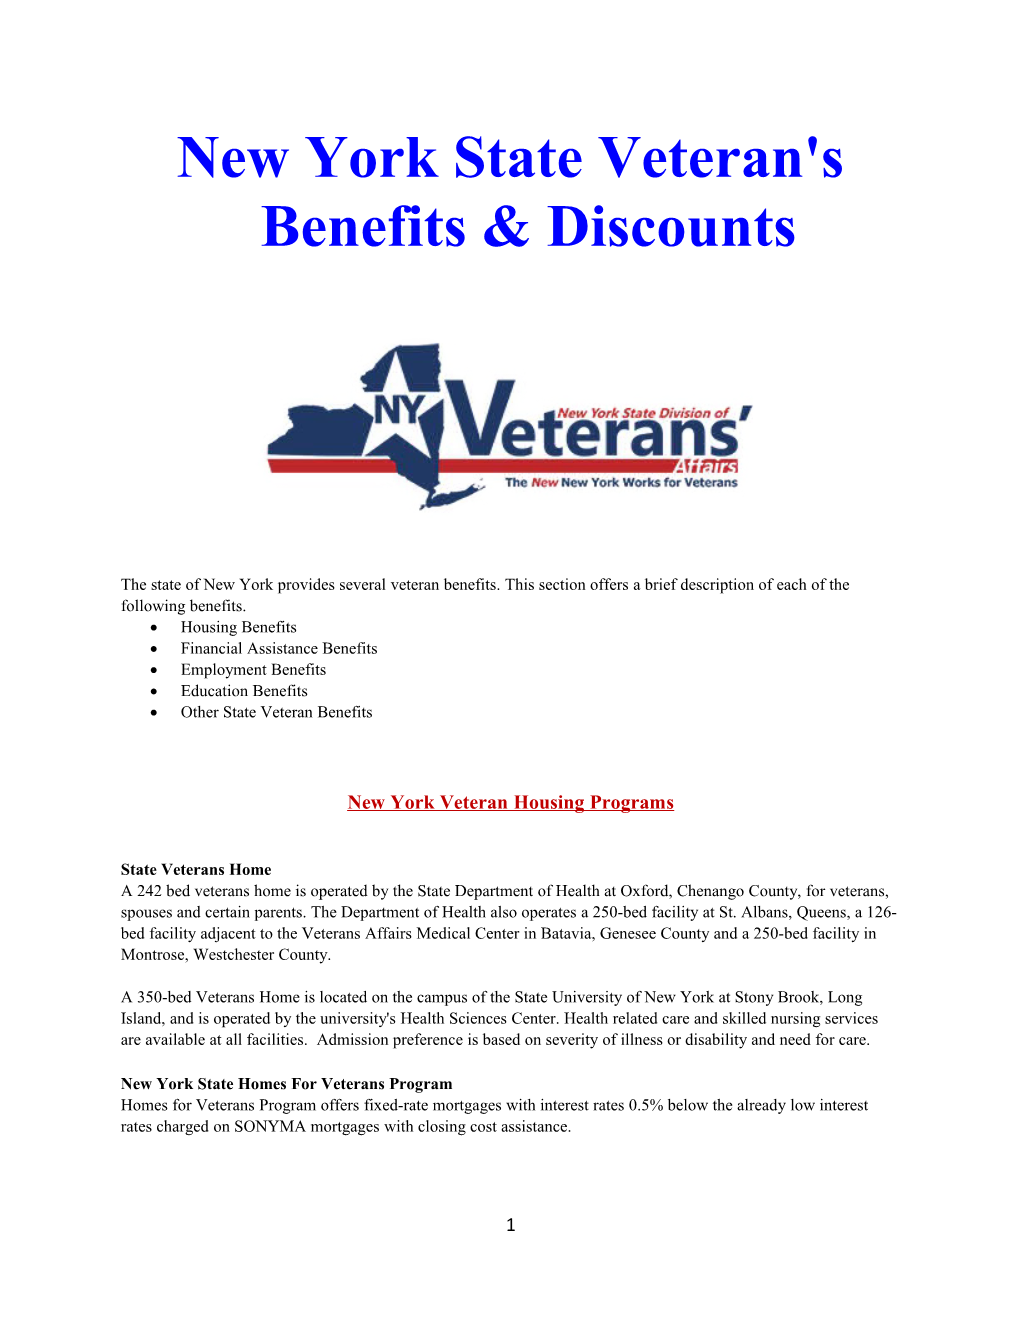 New York State Veteran's Benefits & Discounts